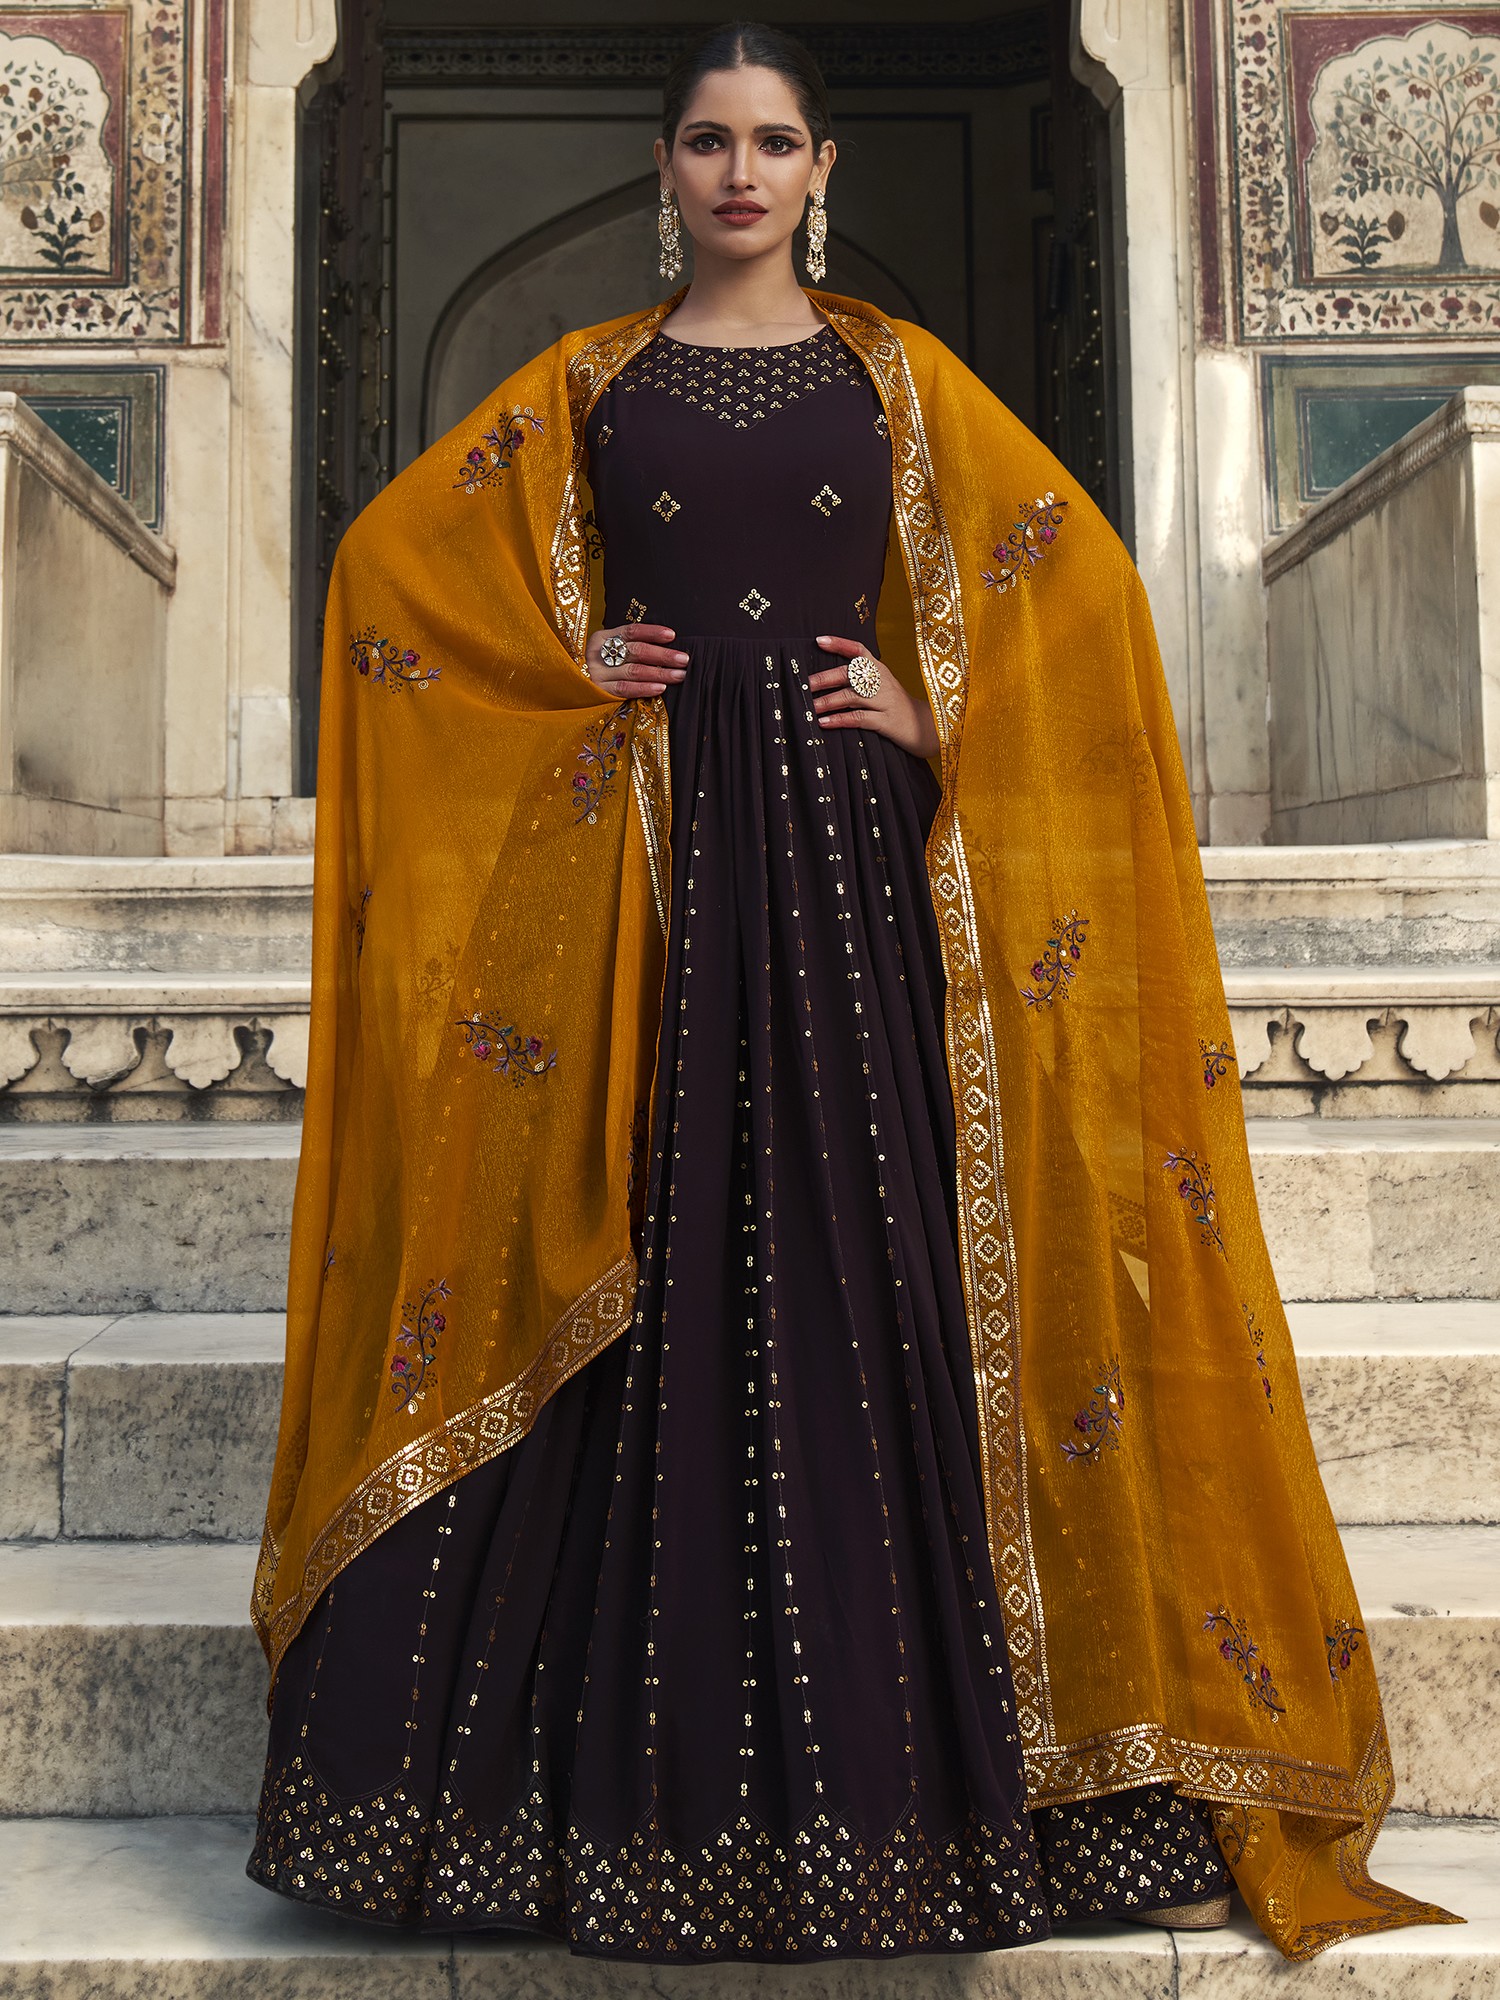 Gold draped Anarkali gown – Ricco India